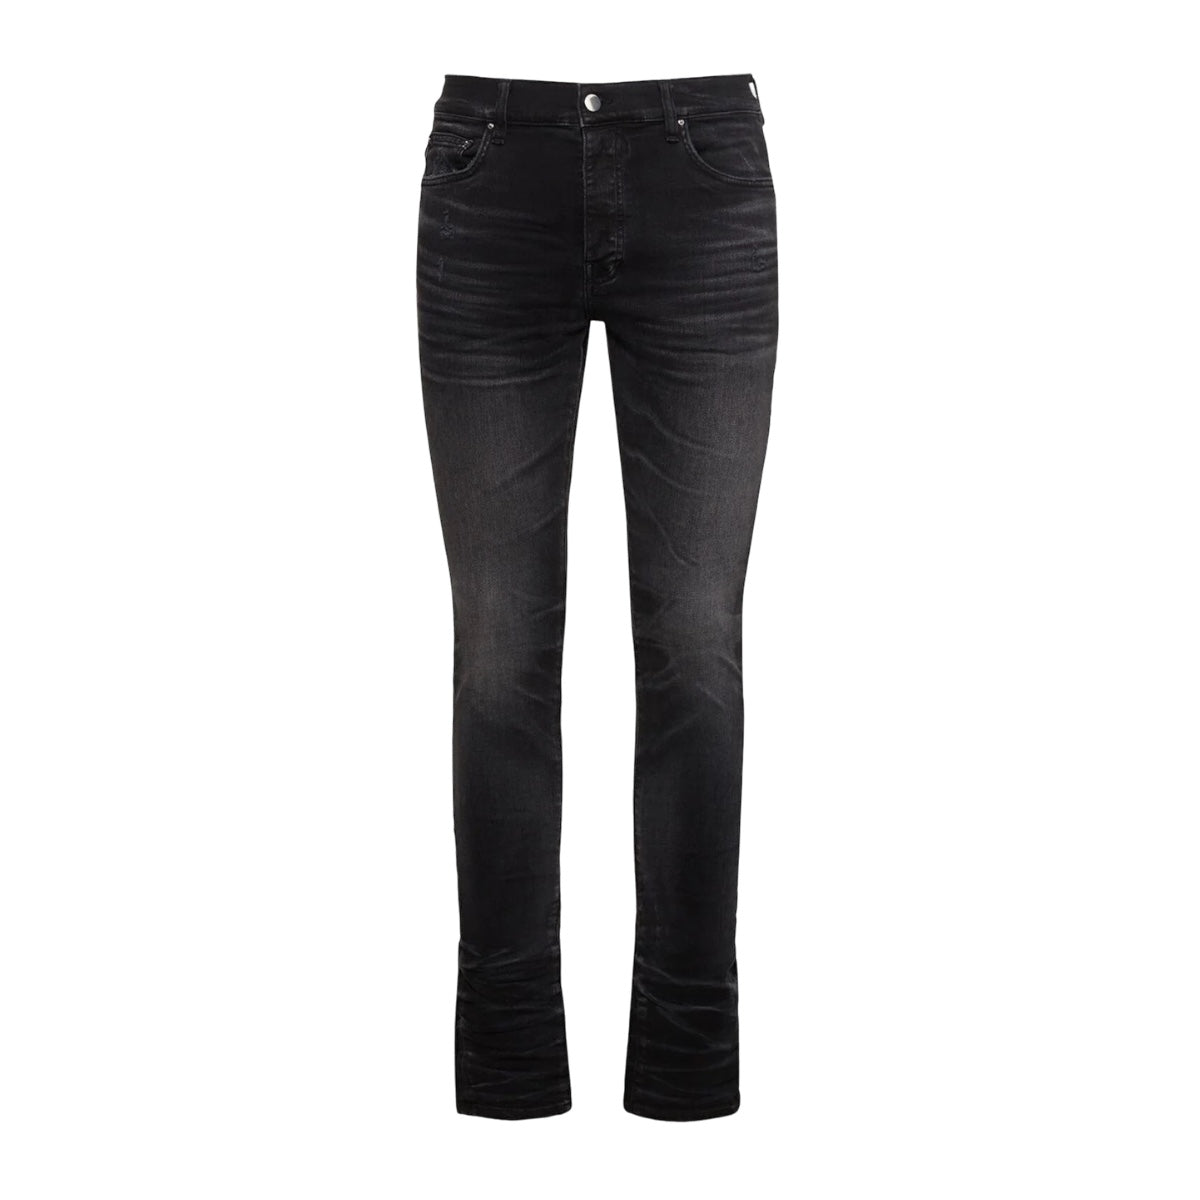 Amiri - Stack Jeans Black